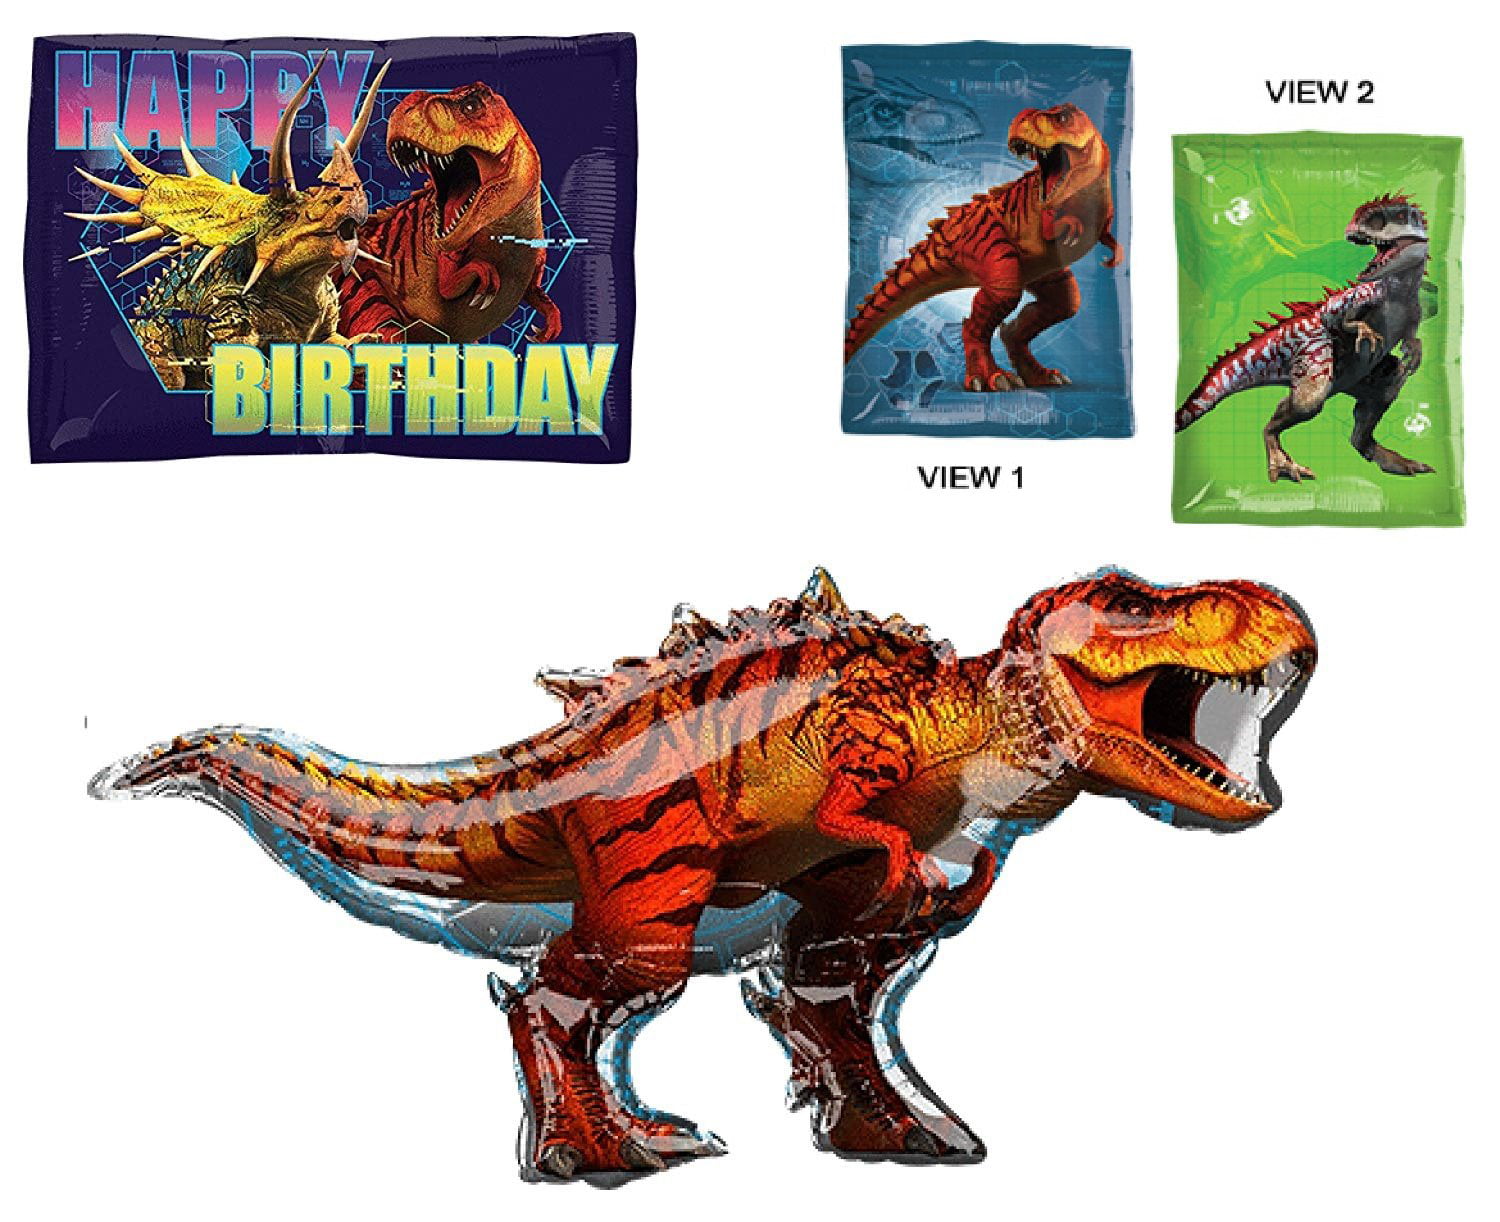 Includes Bir Details about   Jurassic World Fallen Kingdom Dinosaur Party Supplies Pack For 16 